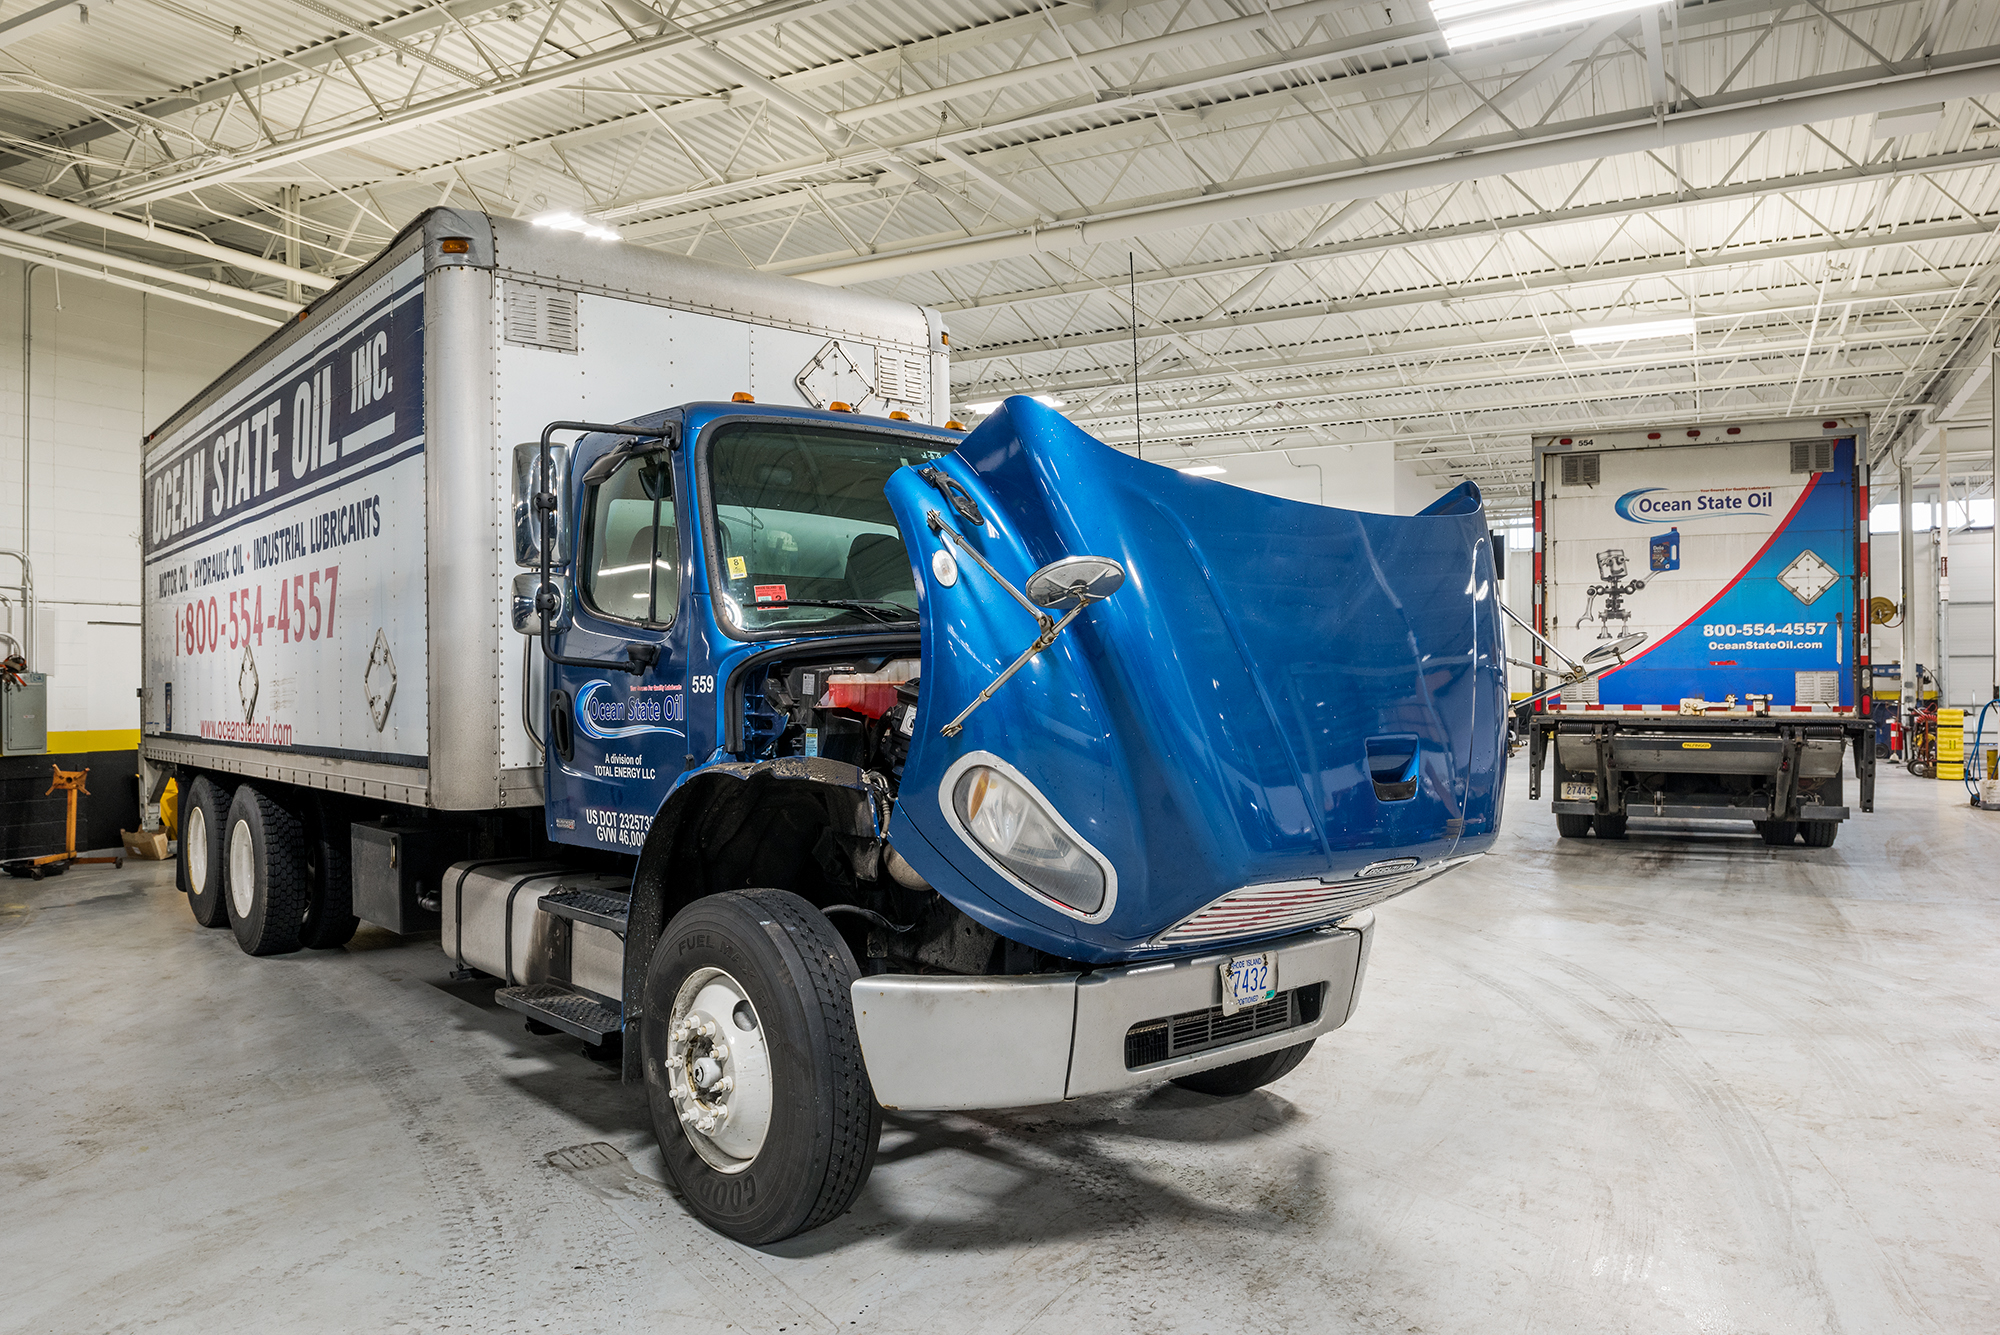 fleet preventative maintenance service program - providence ri truck repair and service company